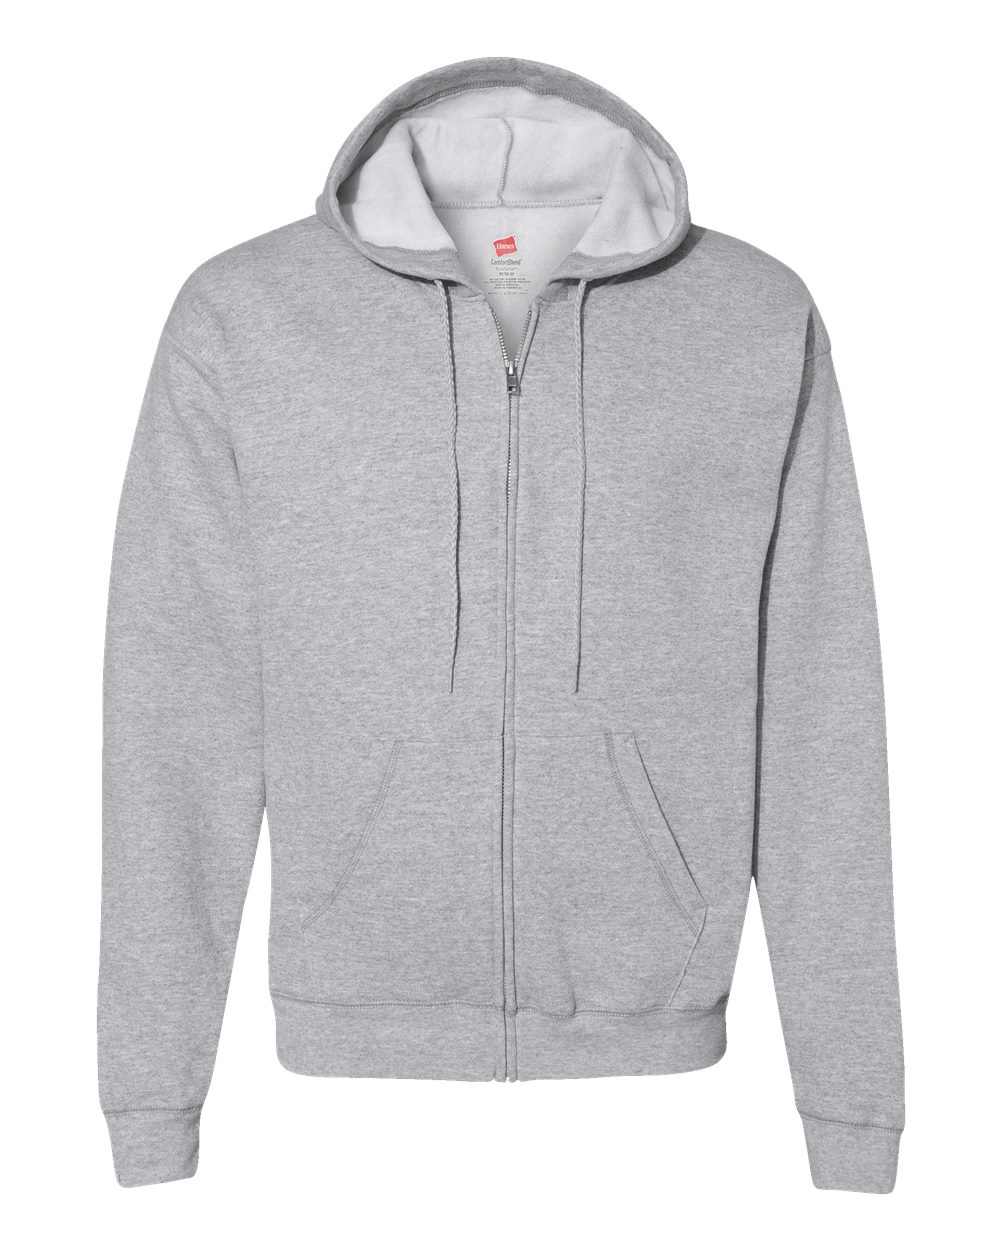 Hanes Mens Ecosmart Blend Full-Zip Hooded Sweatshirt P180 up to 3XL | eBay